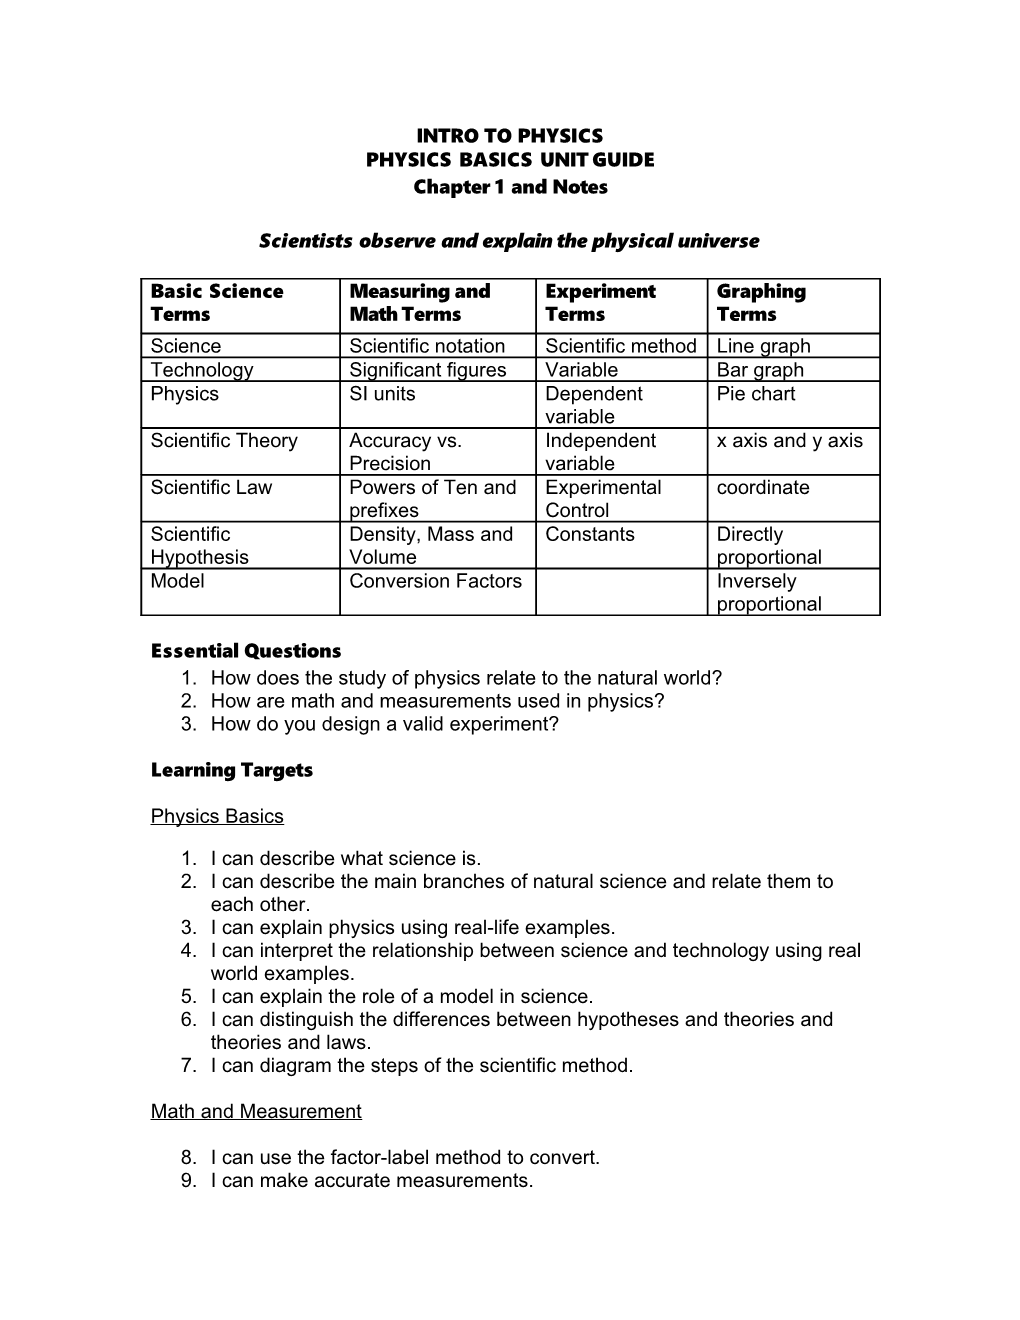 Physics Basics Unit Guide